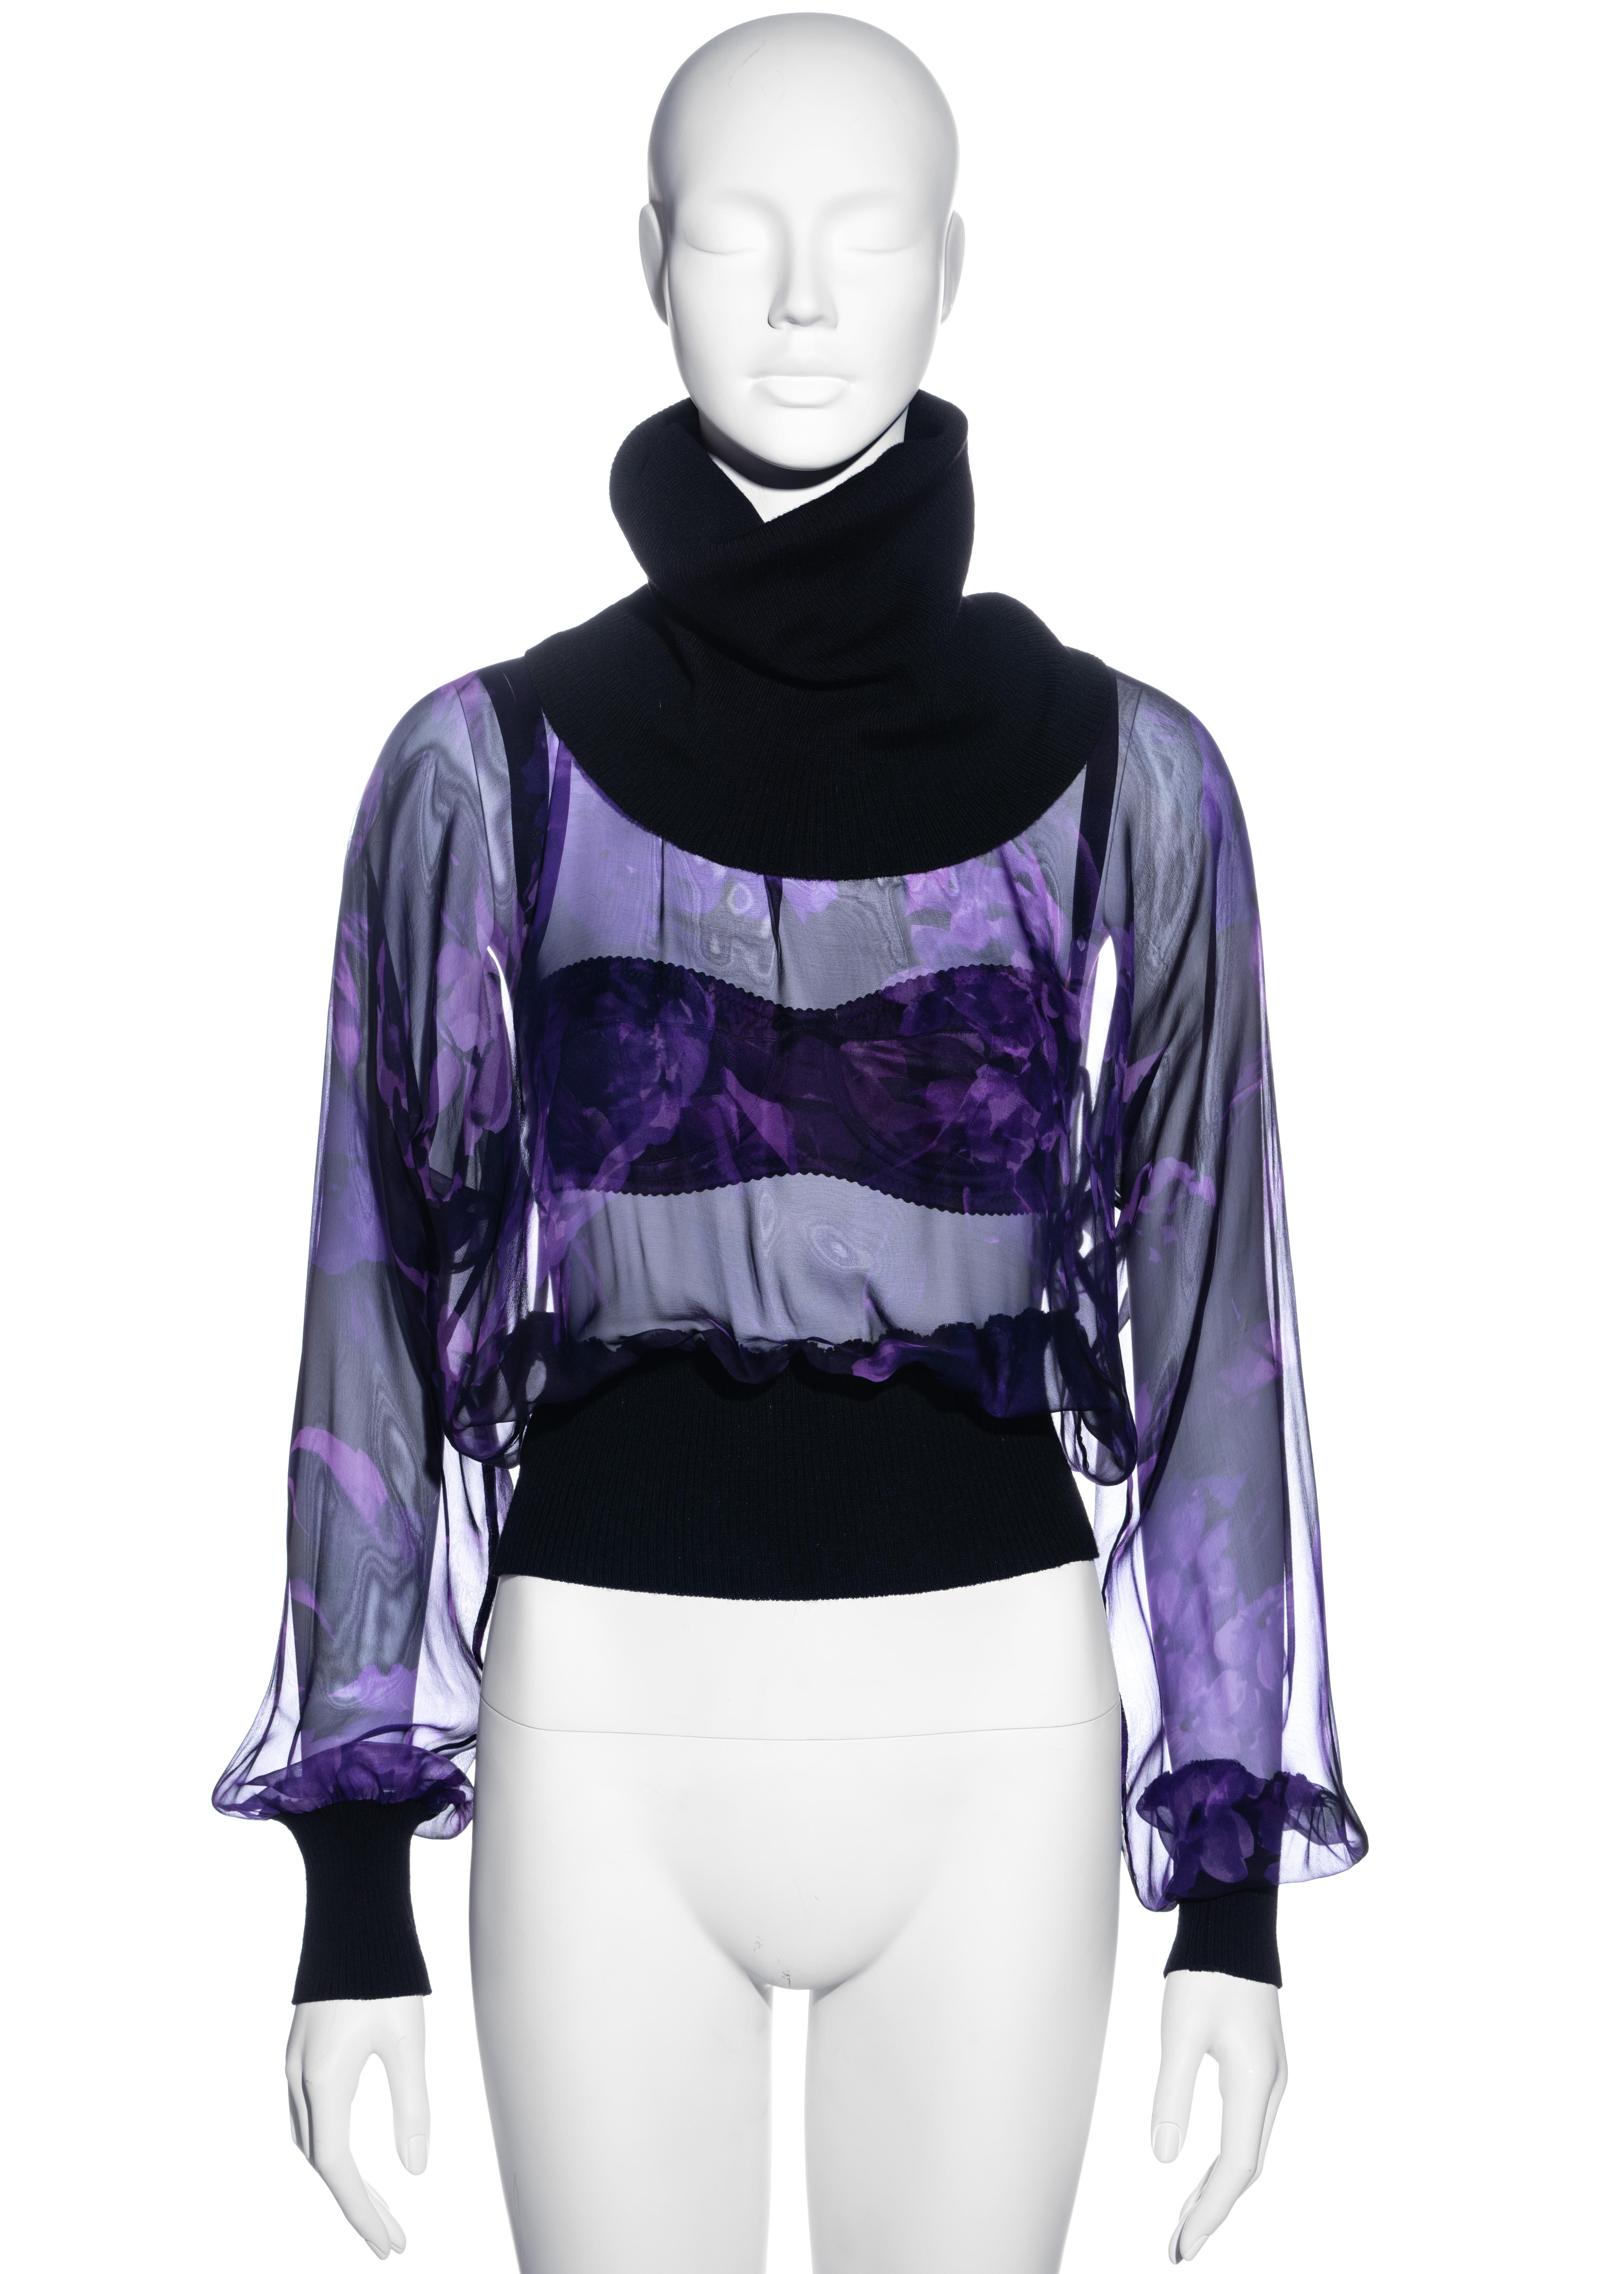 ▪ Dolce & Gabbana purple floral print chiffon blouse and bra set
▪ 100% Silk, 100% Wool
▪ Large knitted turn-over turtleneck and cuffs 
▪ Matching print silk bra 
▪ IT 40 - FR 36 - UK 8 - US 4
▪ Spring-Summer 2000